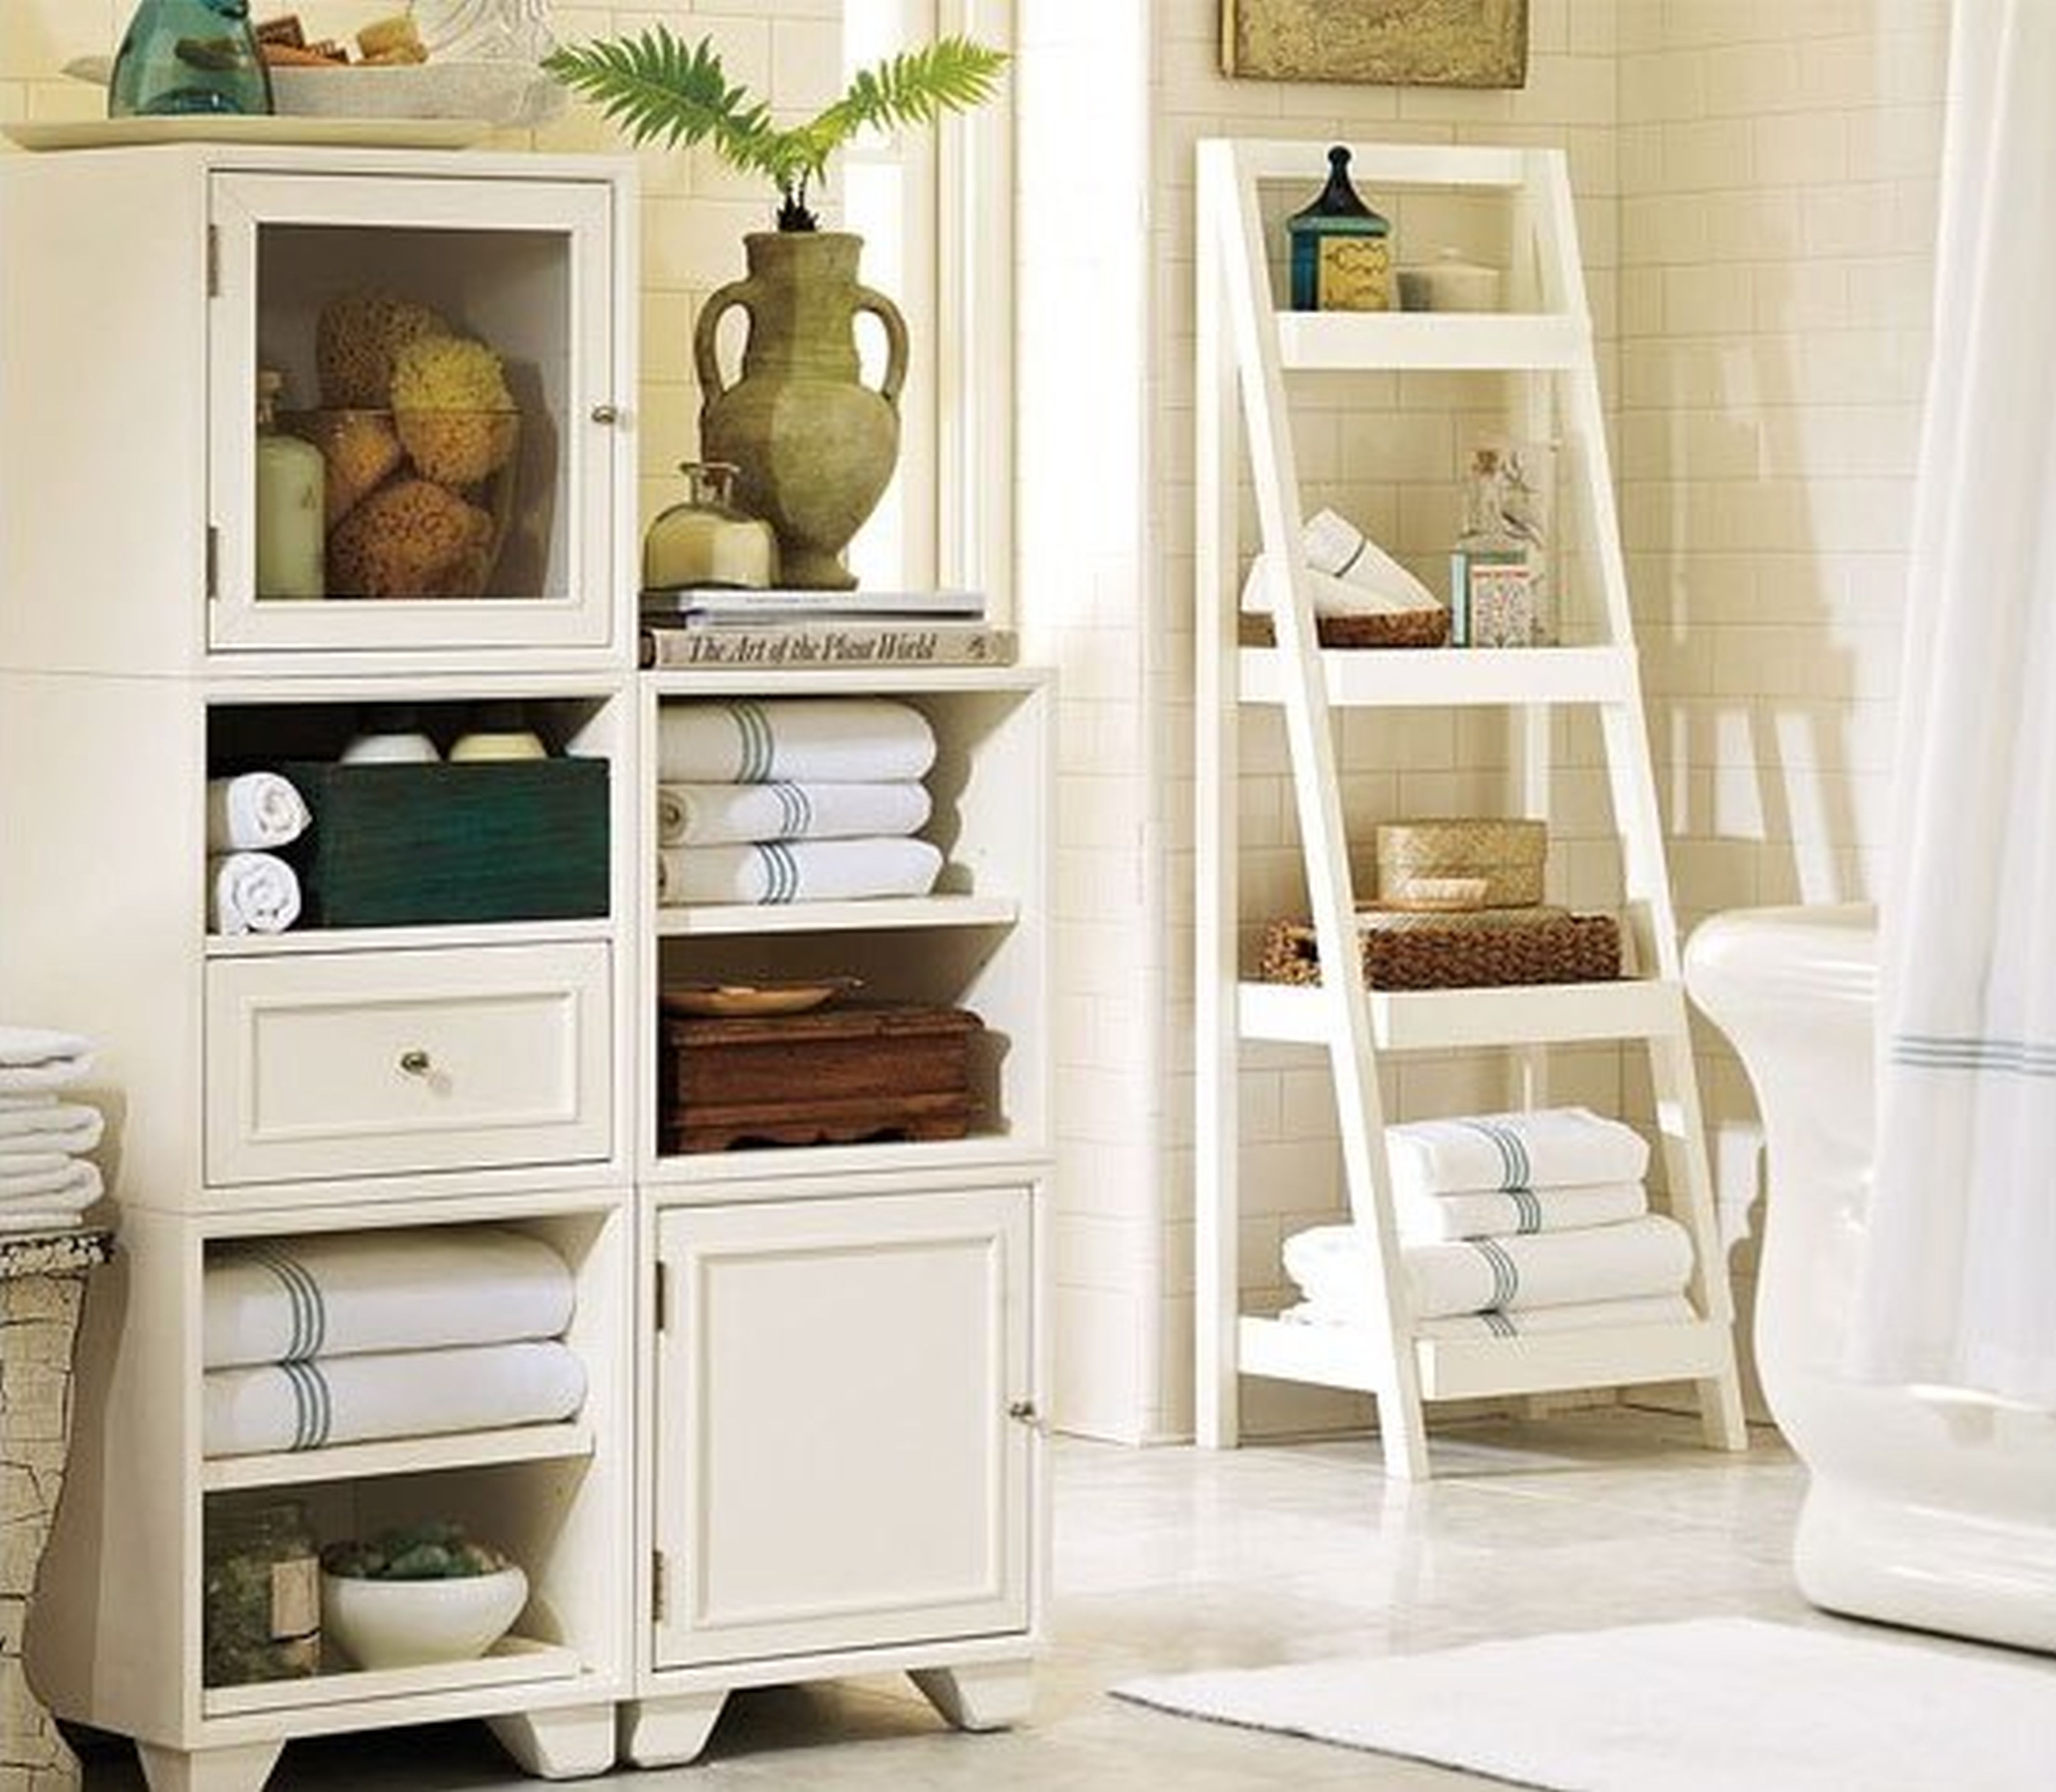 bathroom-decor-ideas-use-ladder-shelves-for-storage-Amazing-Inspiring-Bathroom-Ideas